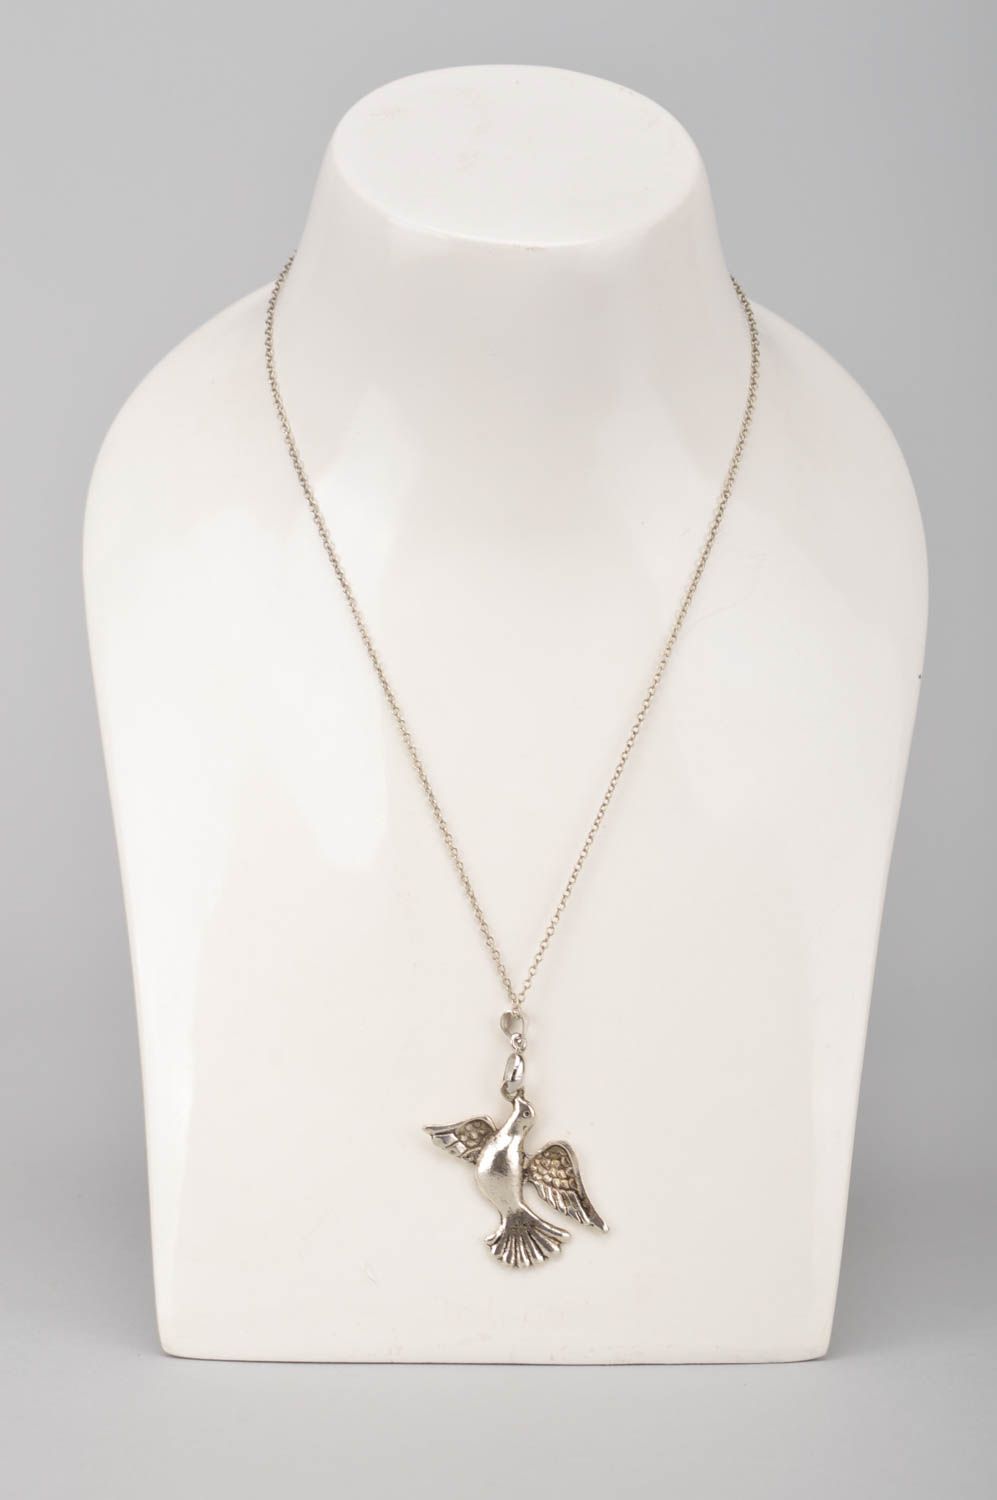 Beautiful handmade metal pendant metal jewelry designer gifts for her photo 2